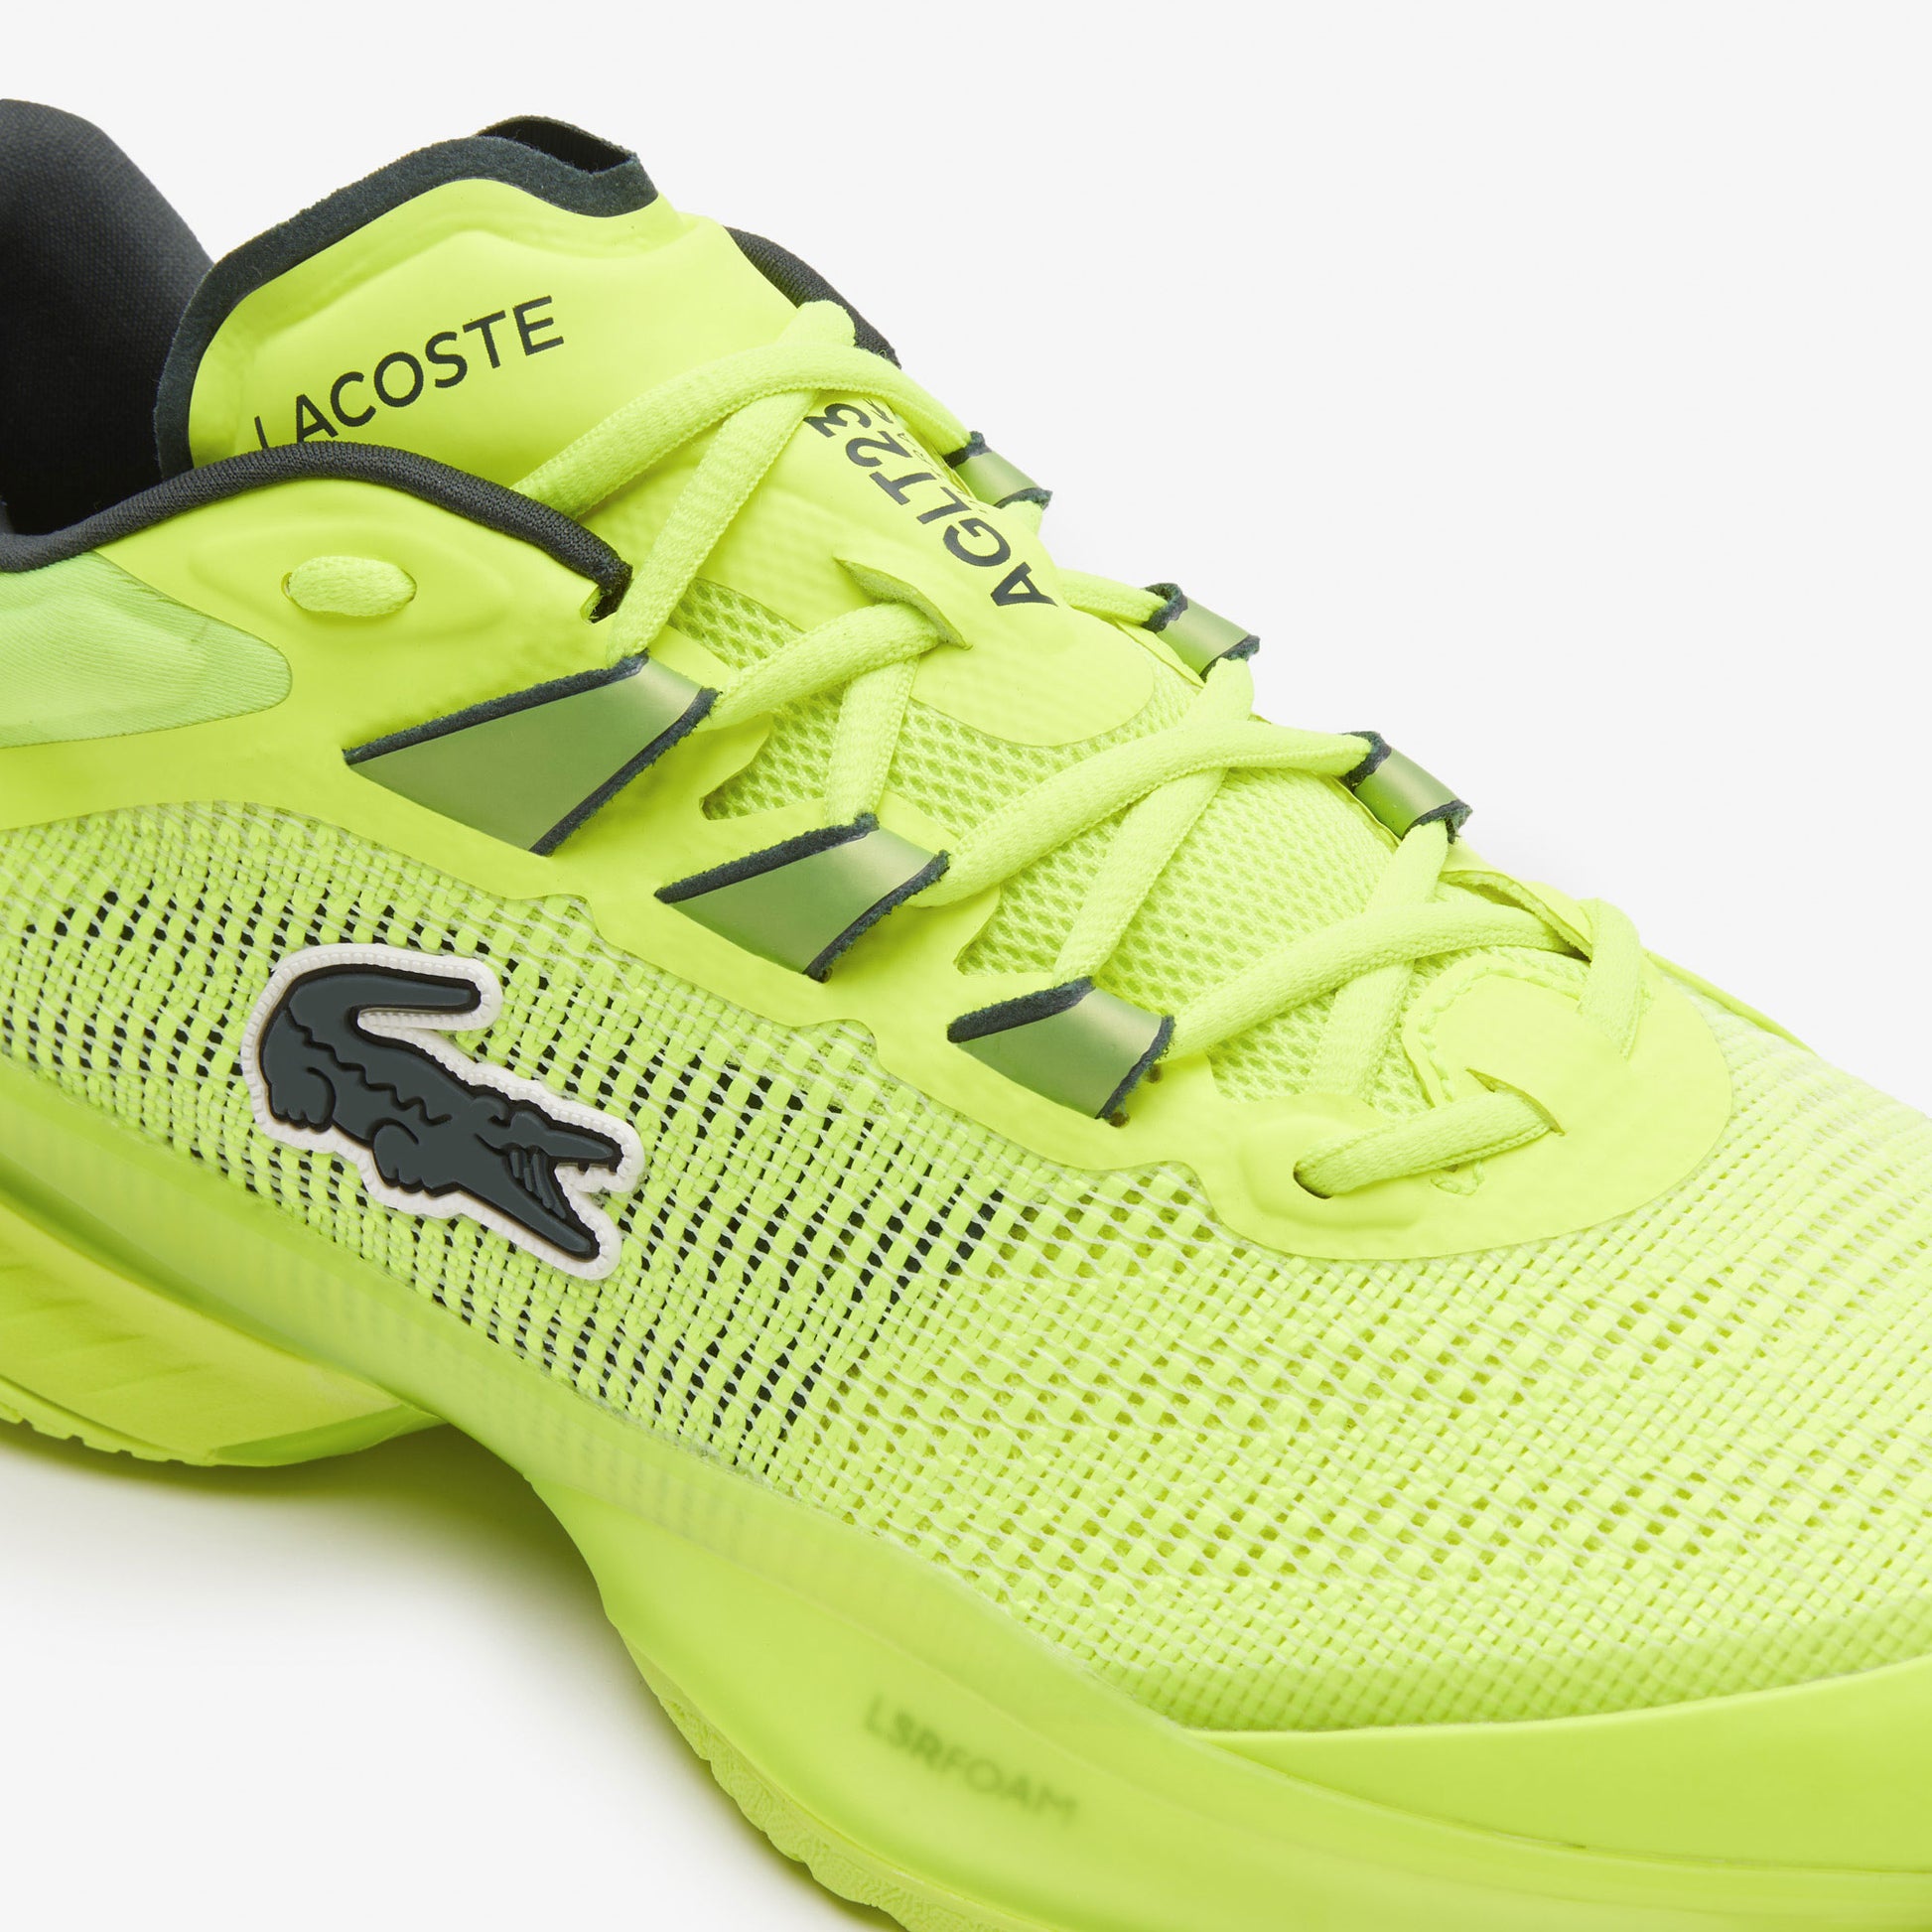 Lacoste AG-LT23 Ultra Men's Tennis Shoes Yellow (6)